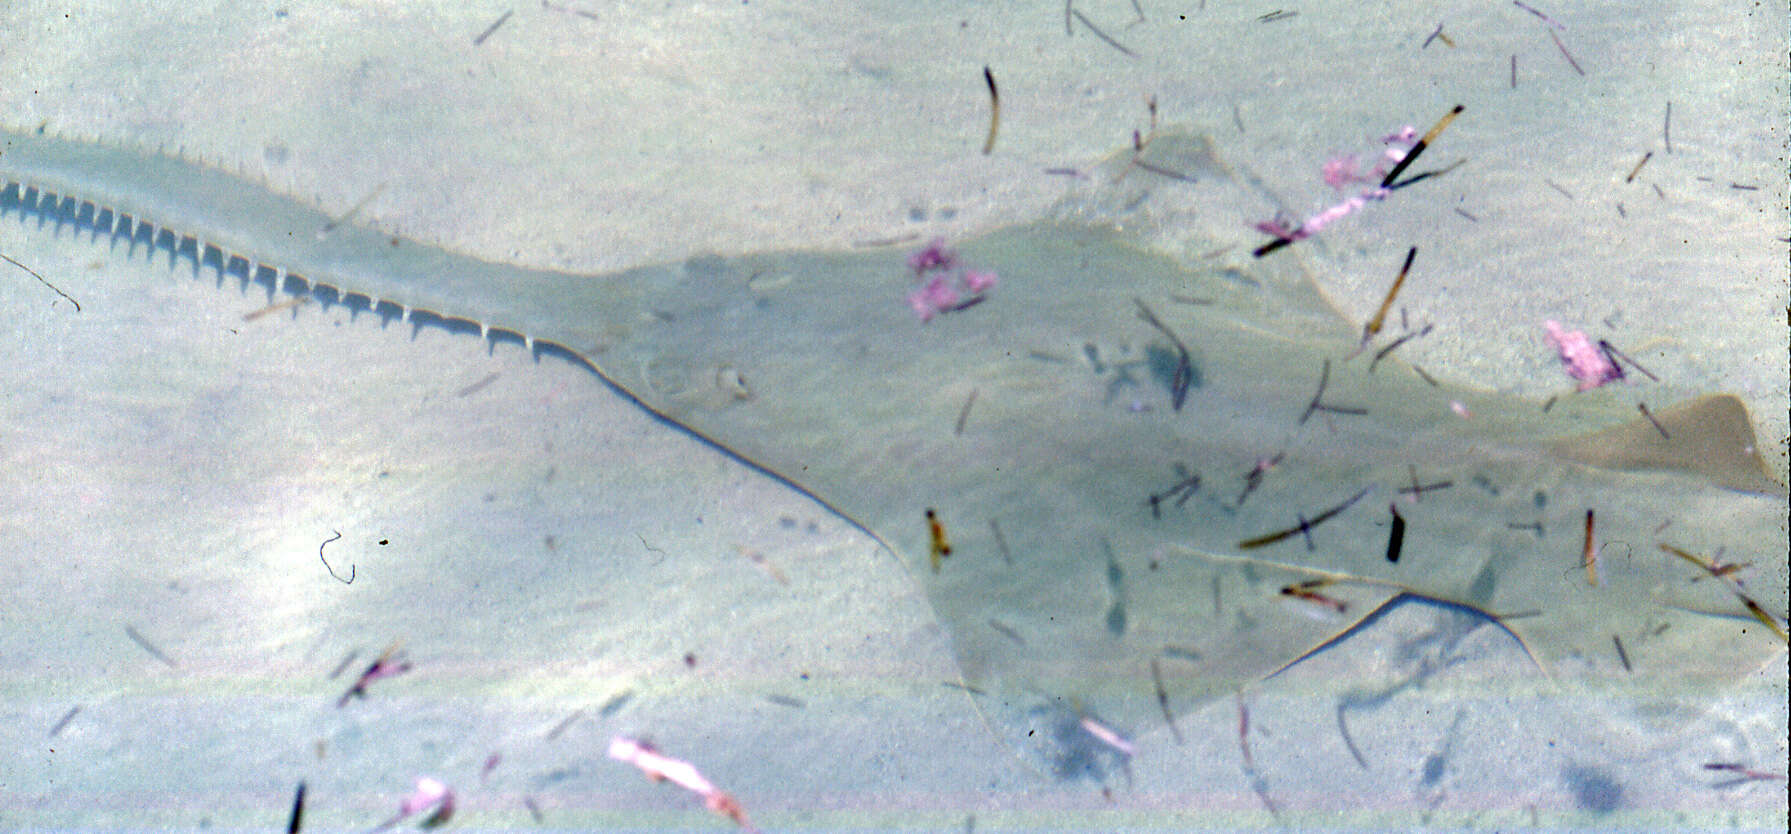 Image of Smalltooth Sawfish